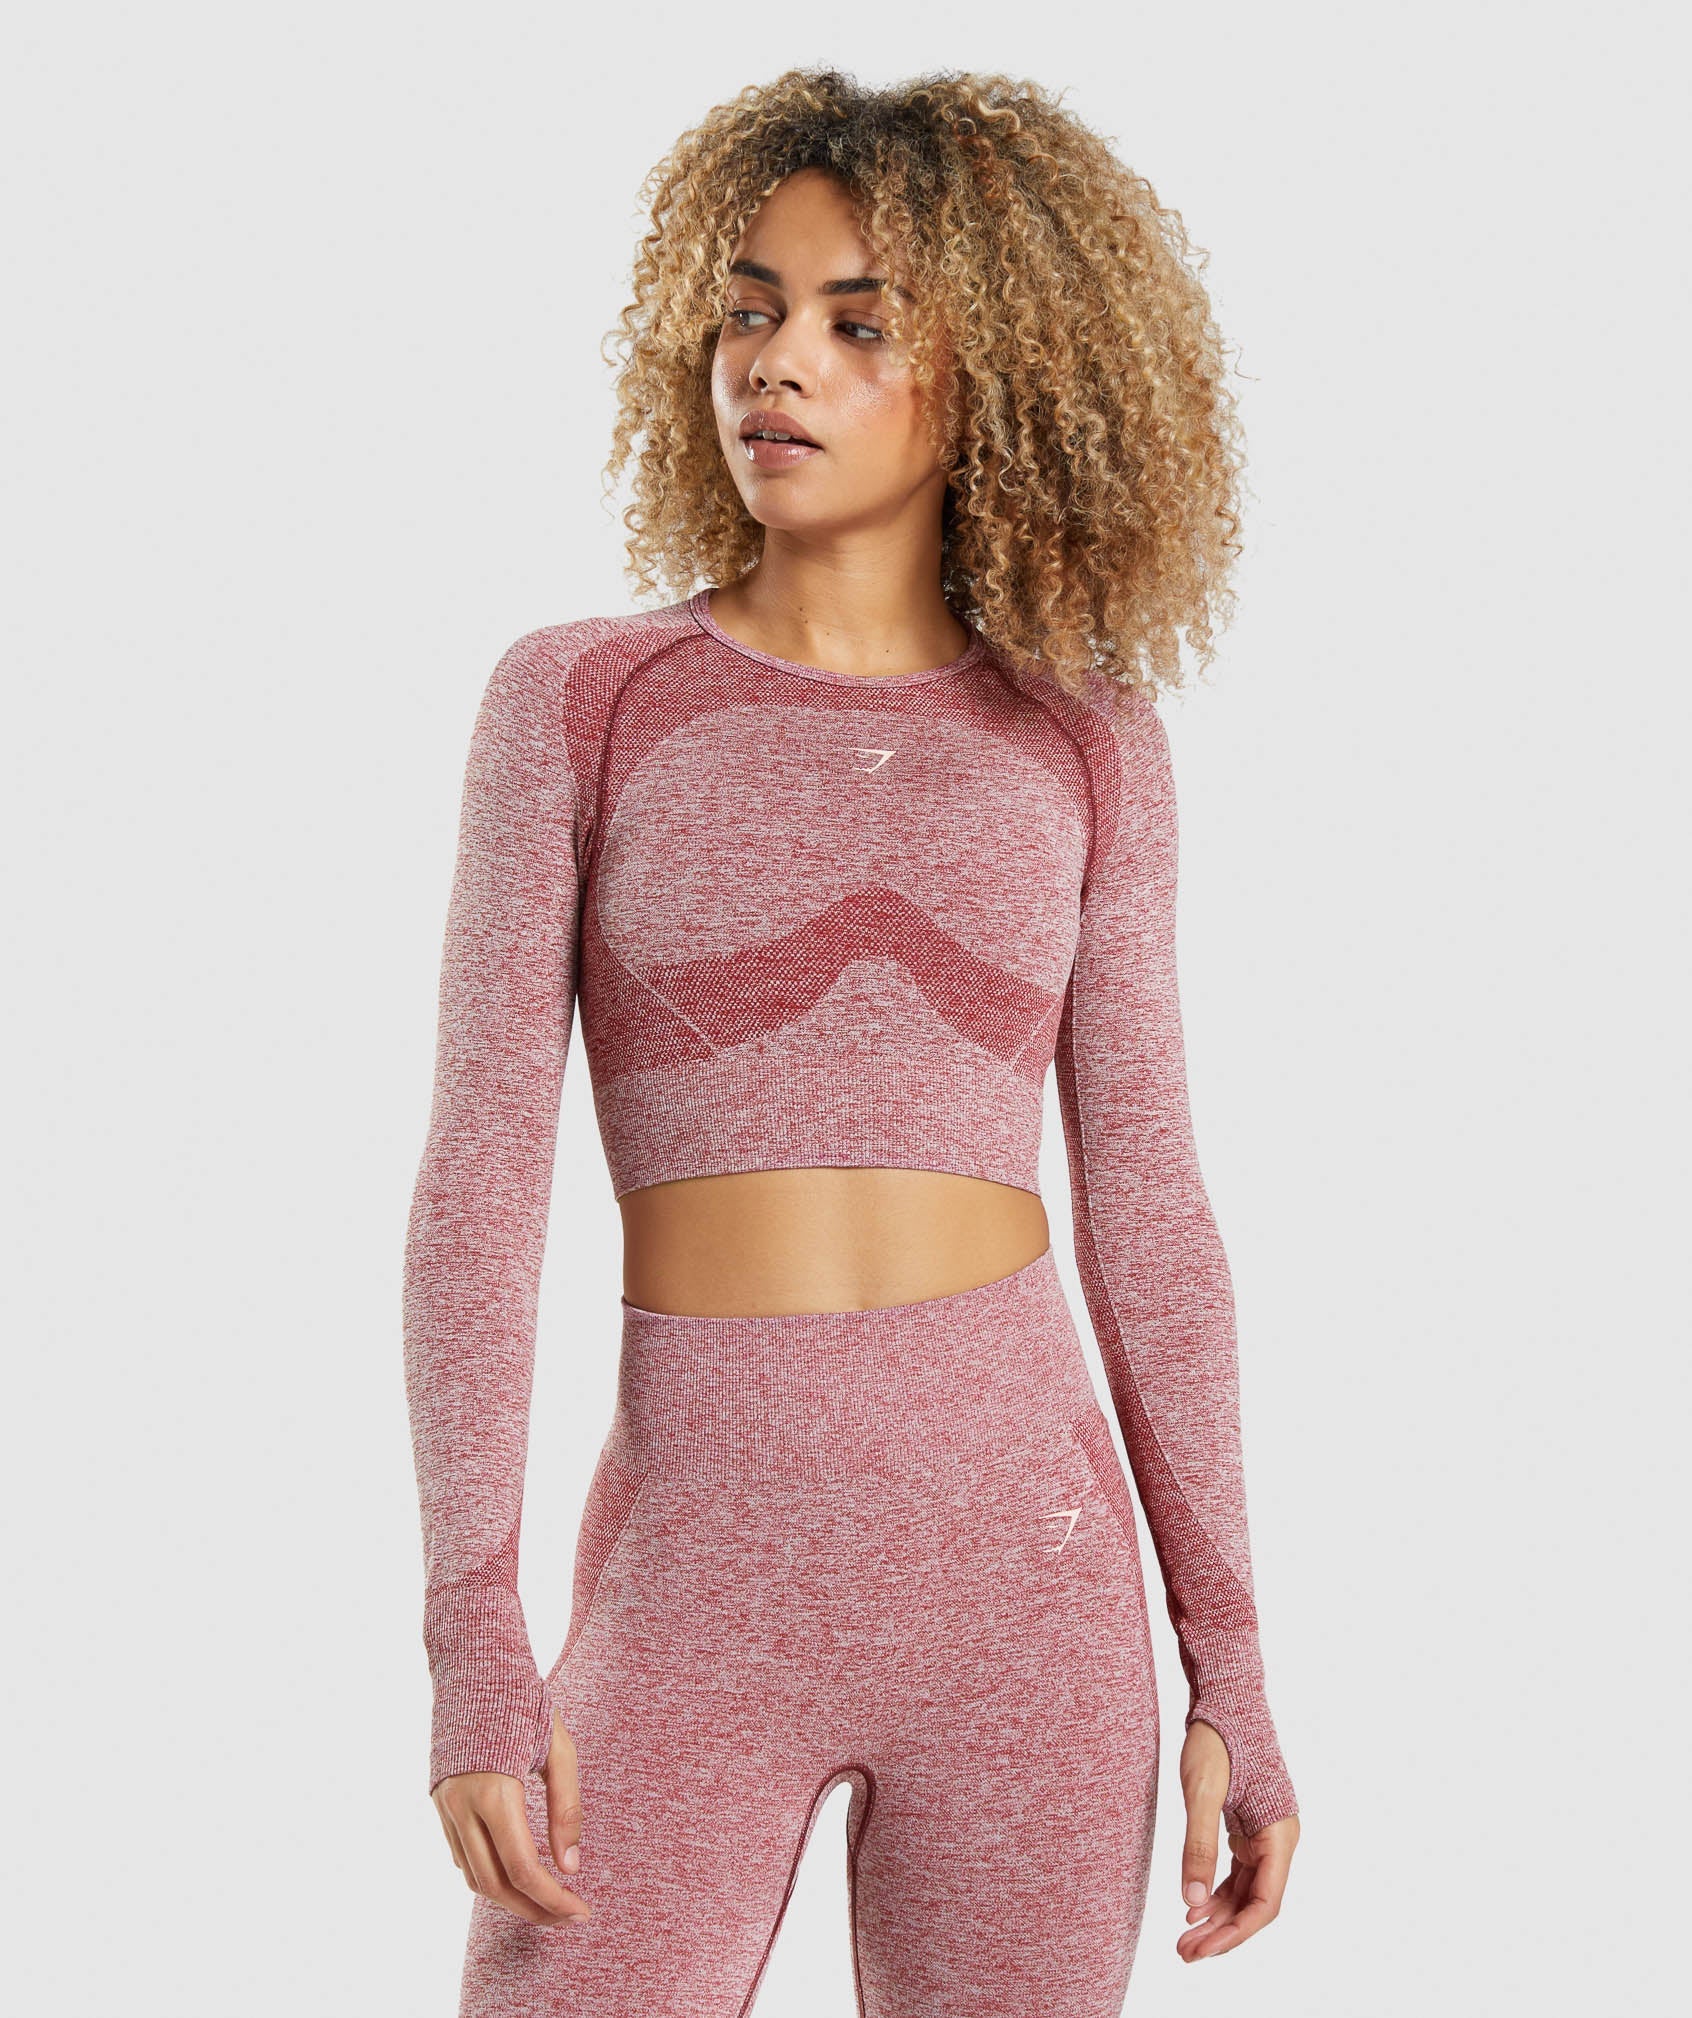 Gymshark Flex Sports Long Sleeve Crop Top size S Pink - $27